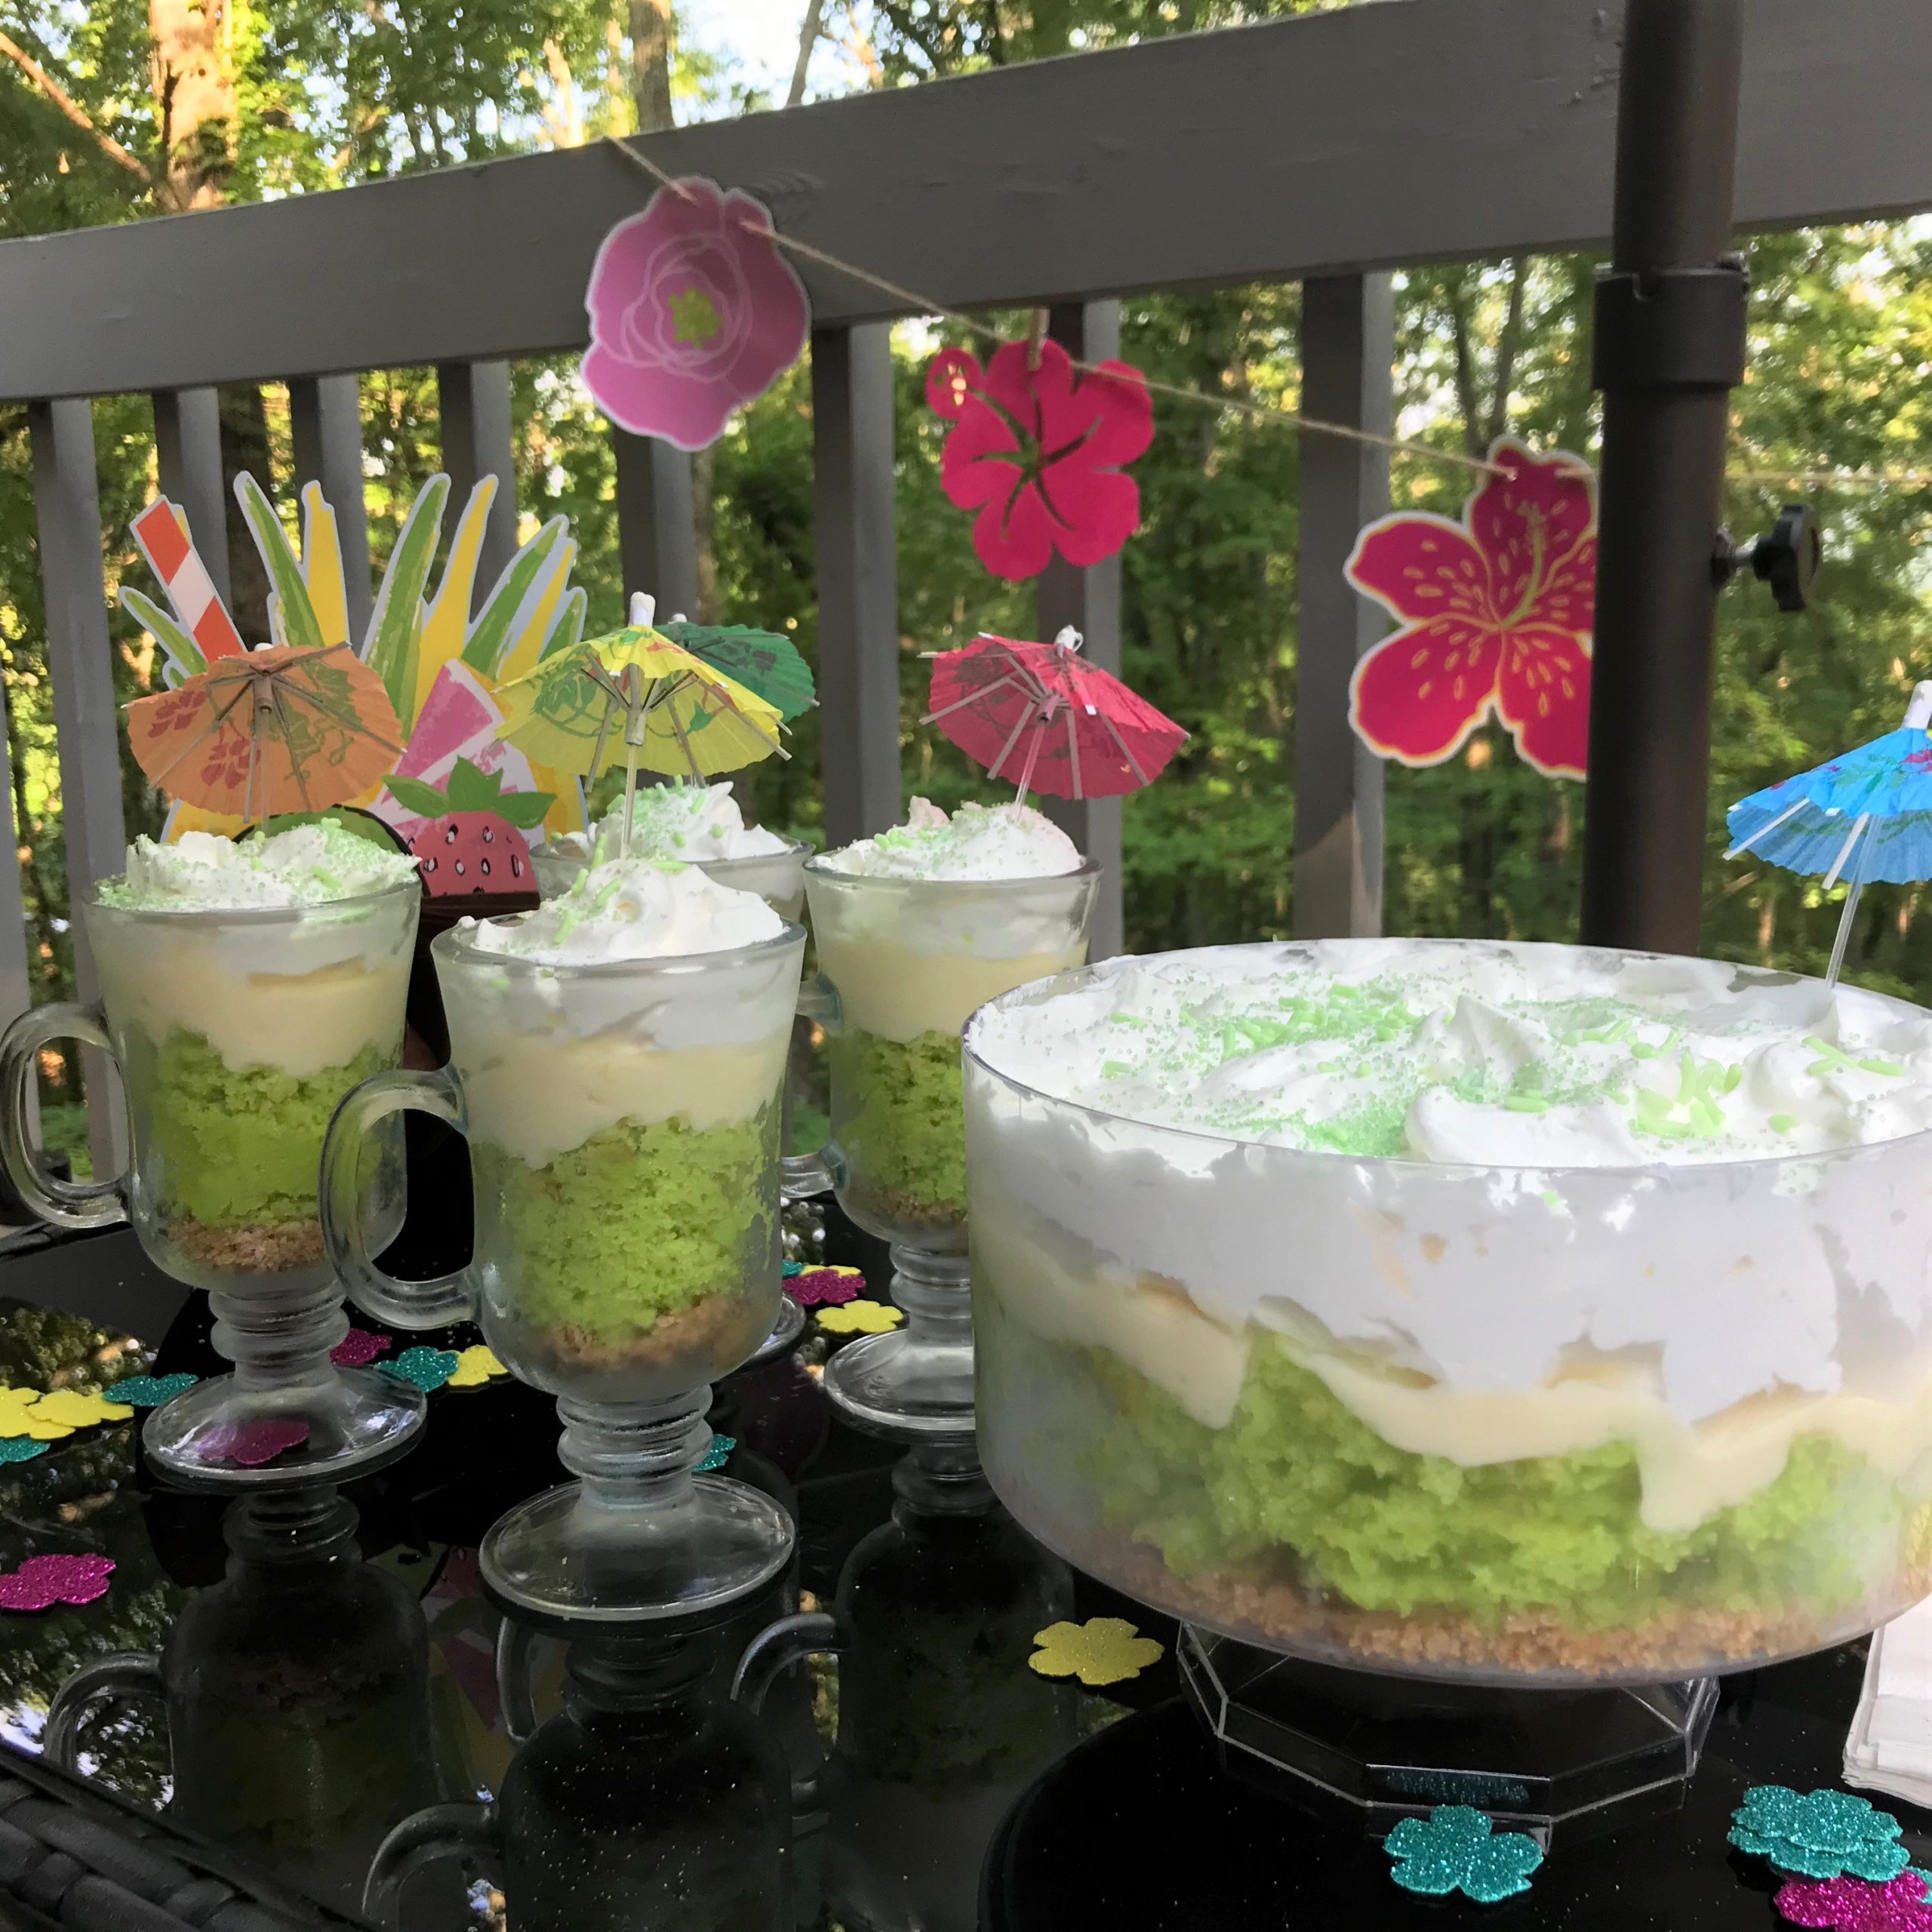 Summer Dessert Recipes For Crowds - A Crowd Pleaser Summer Cake Recipe Not To Miss Westport Moms ...